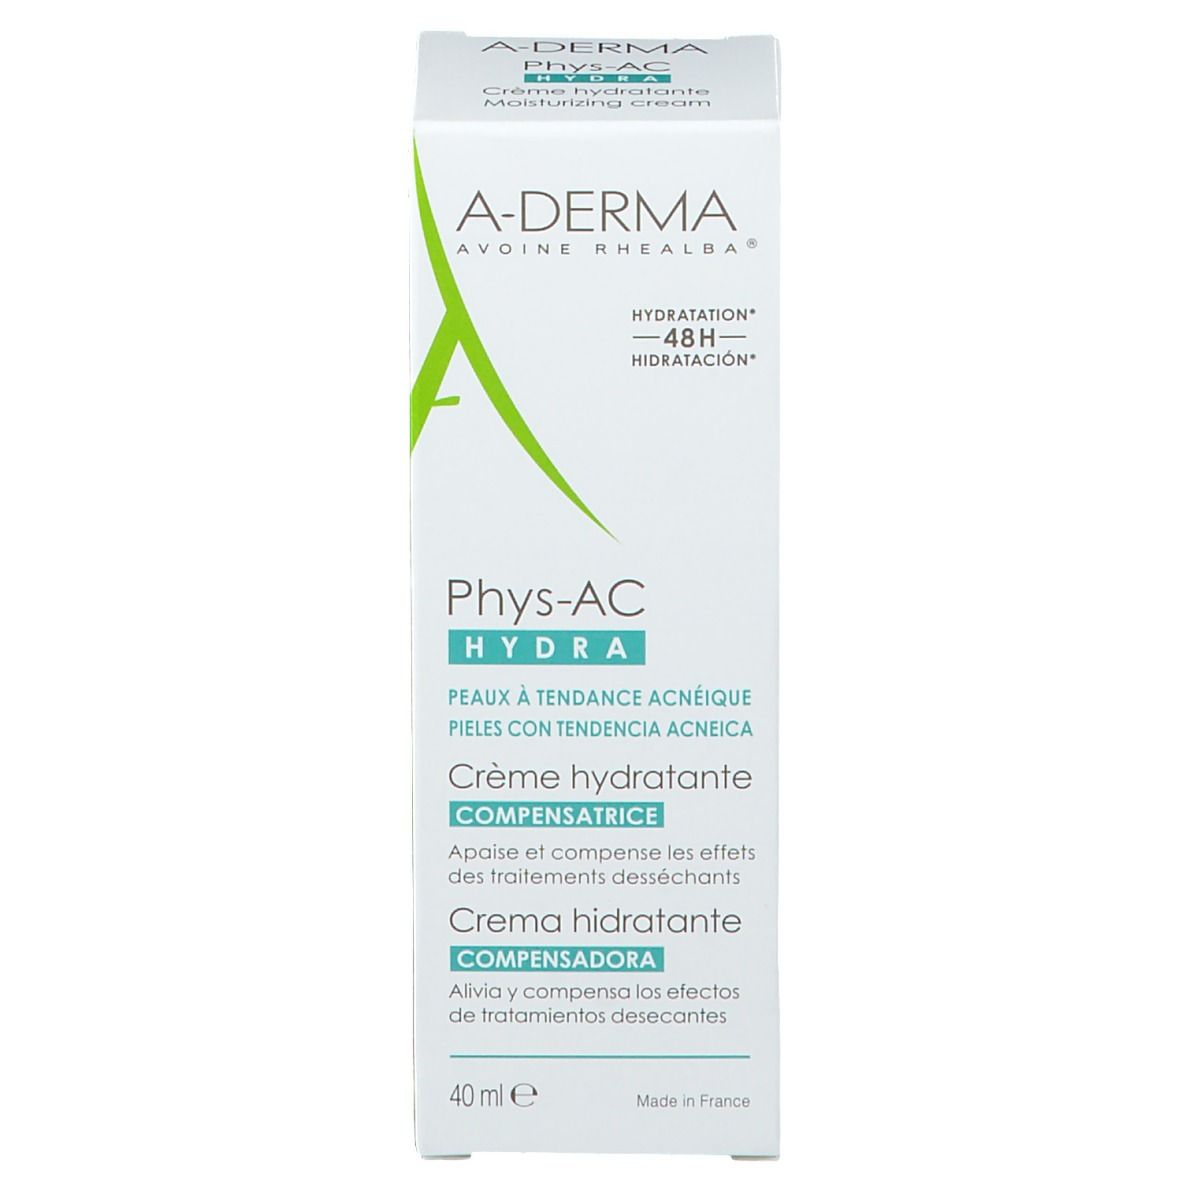 A-DERMA Phys-AC Hydra Crema Idratante Compensatrice